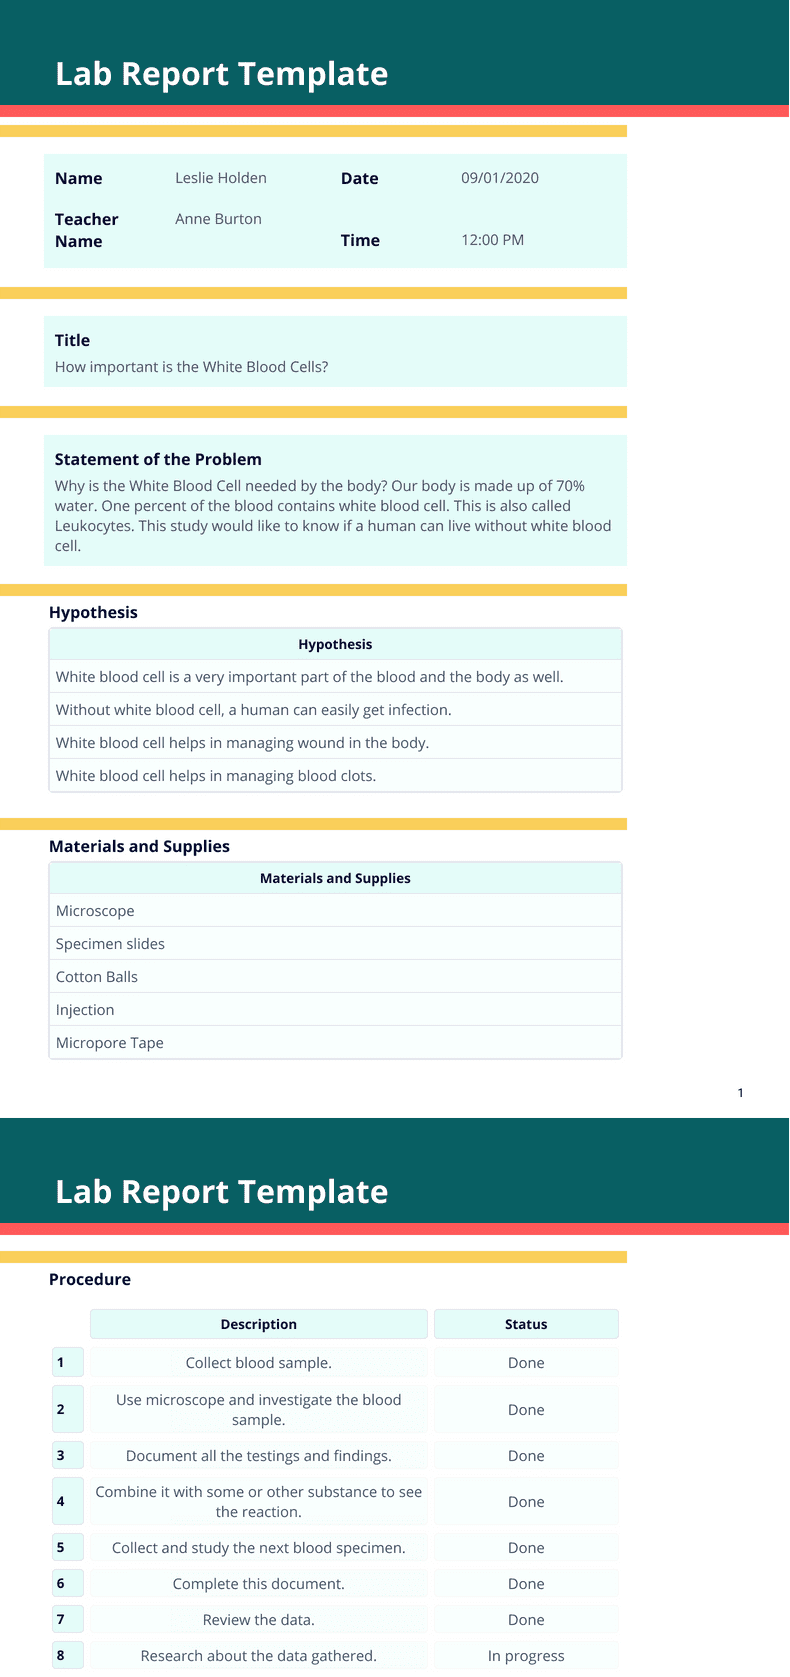 PDF Templates: Lab Report Template